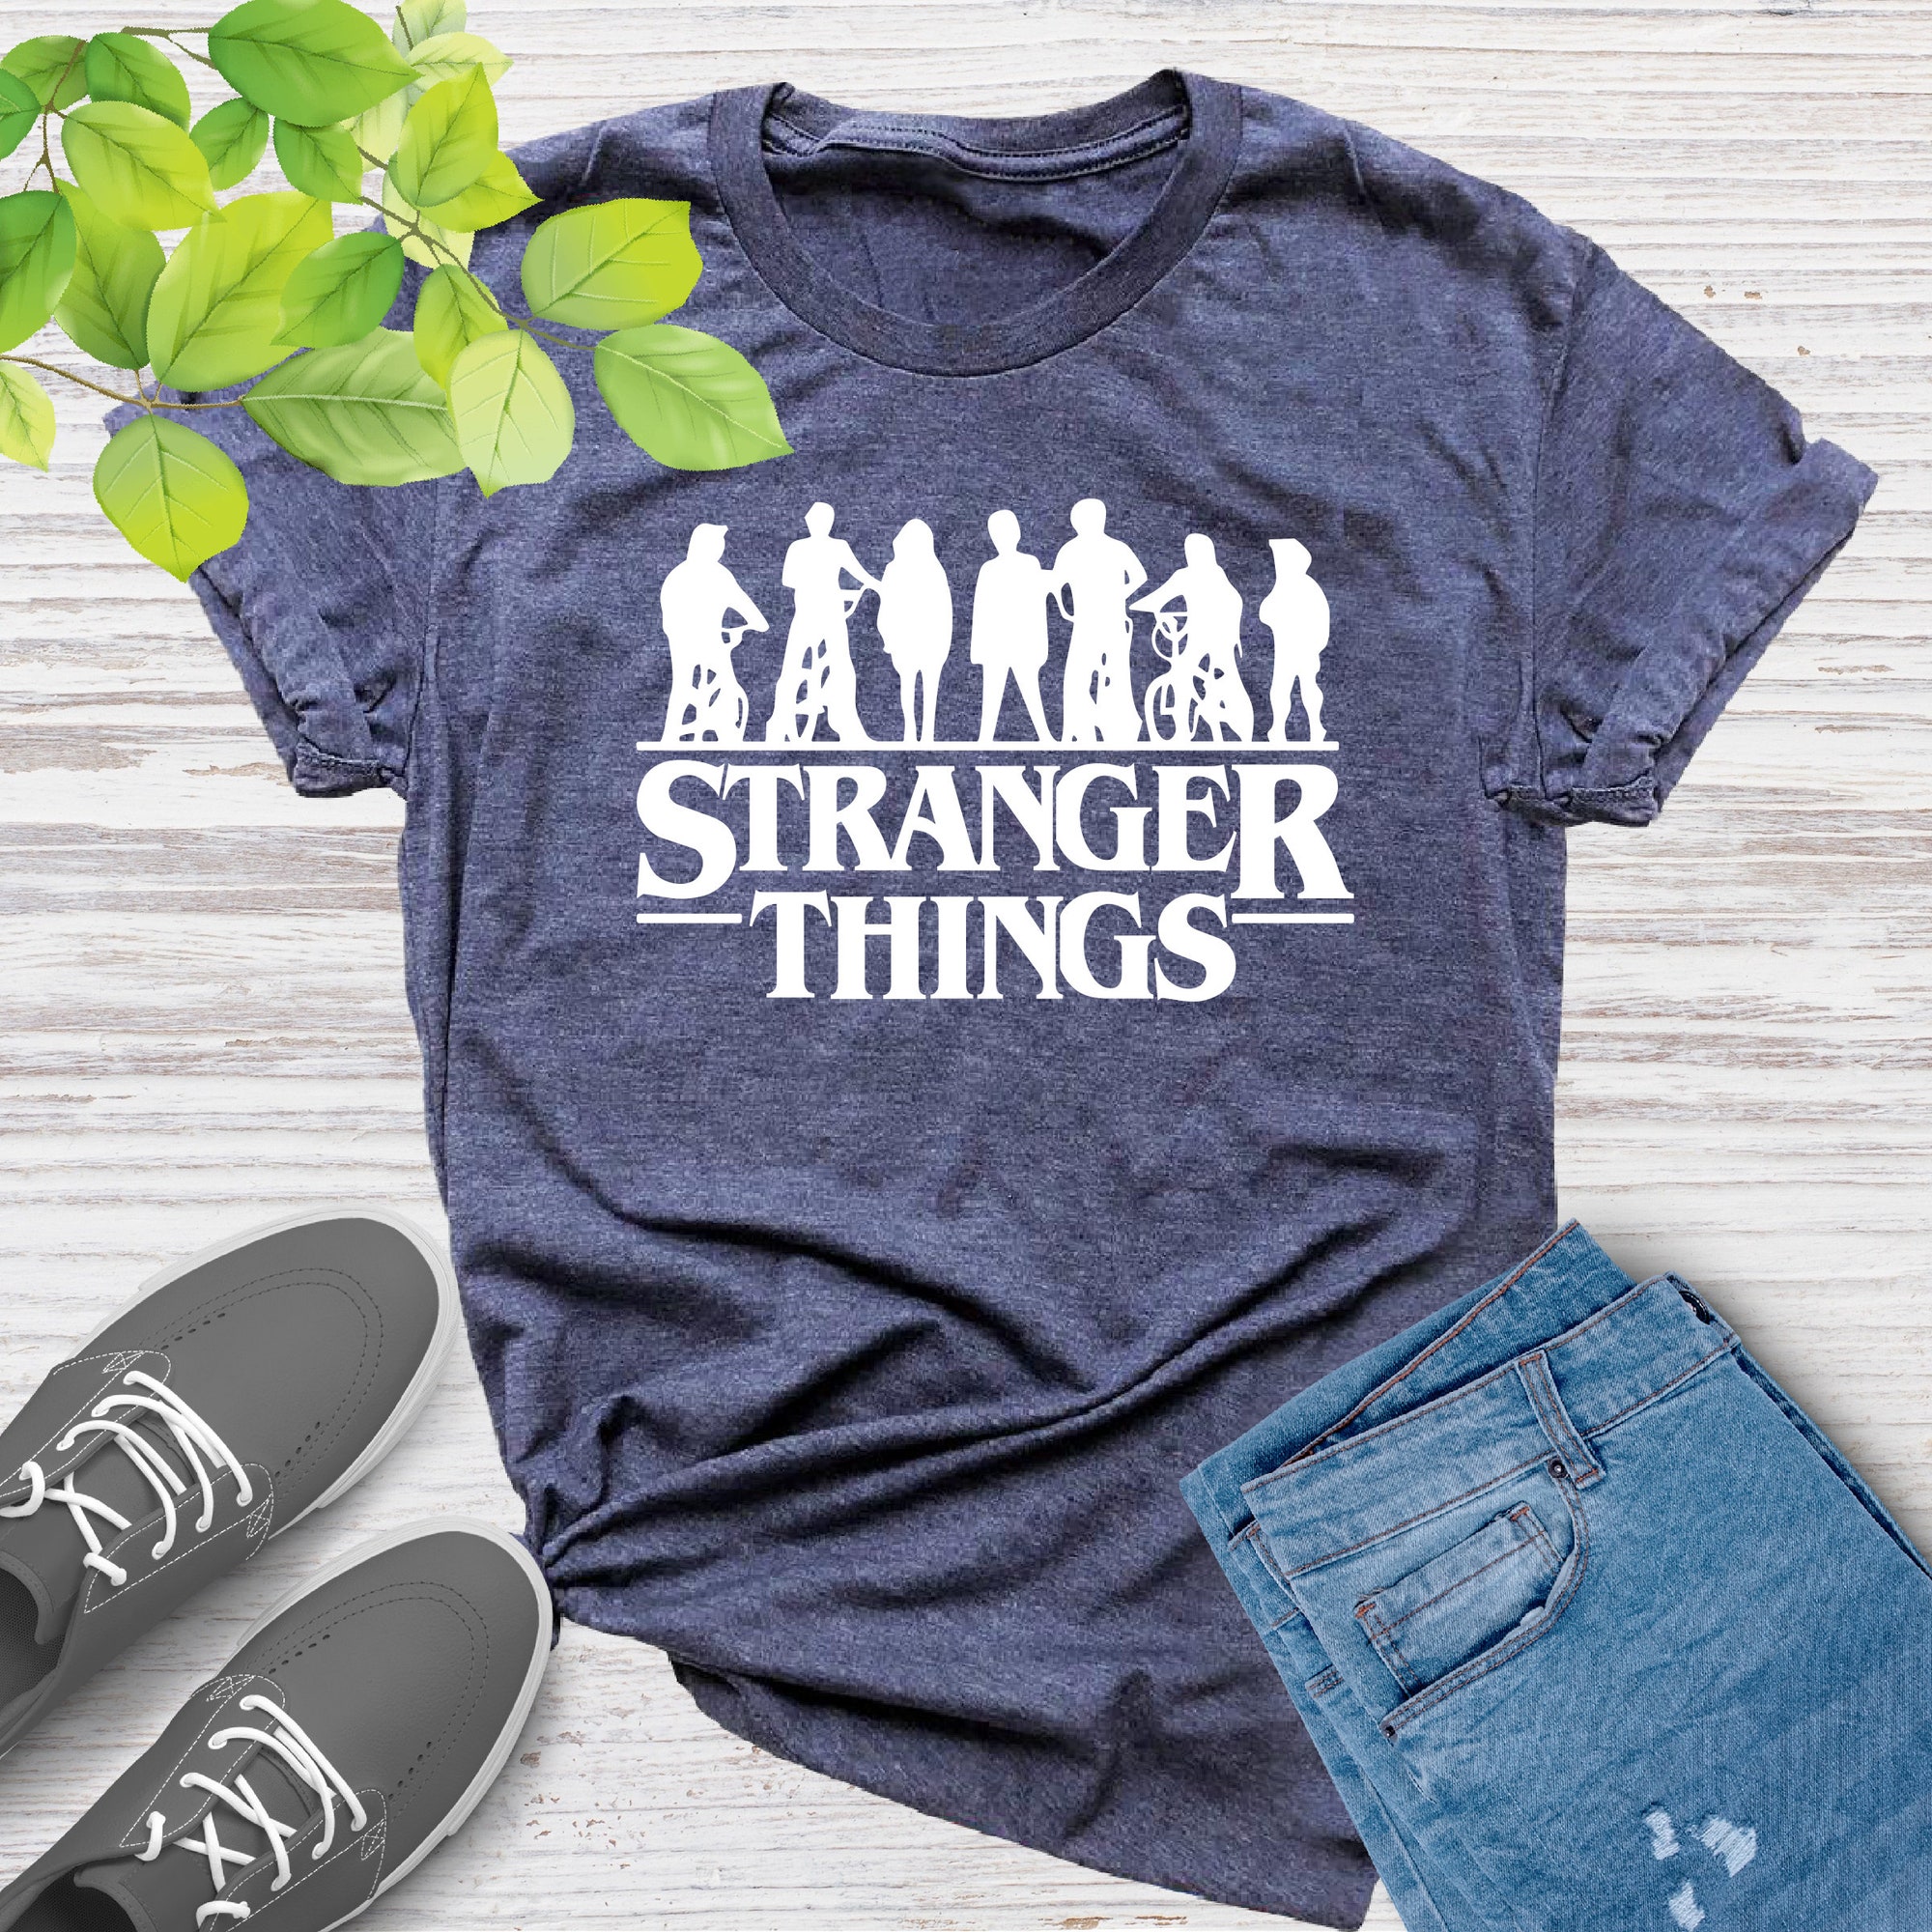 Discover Stranger Things T-shirt